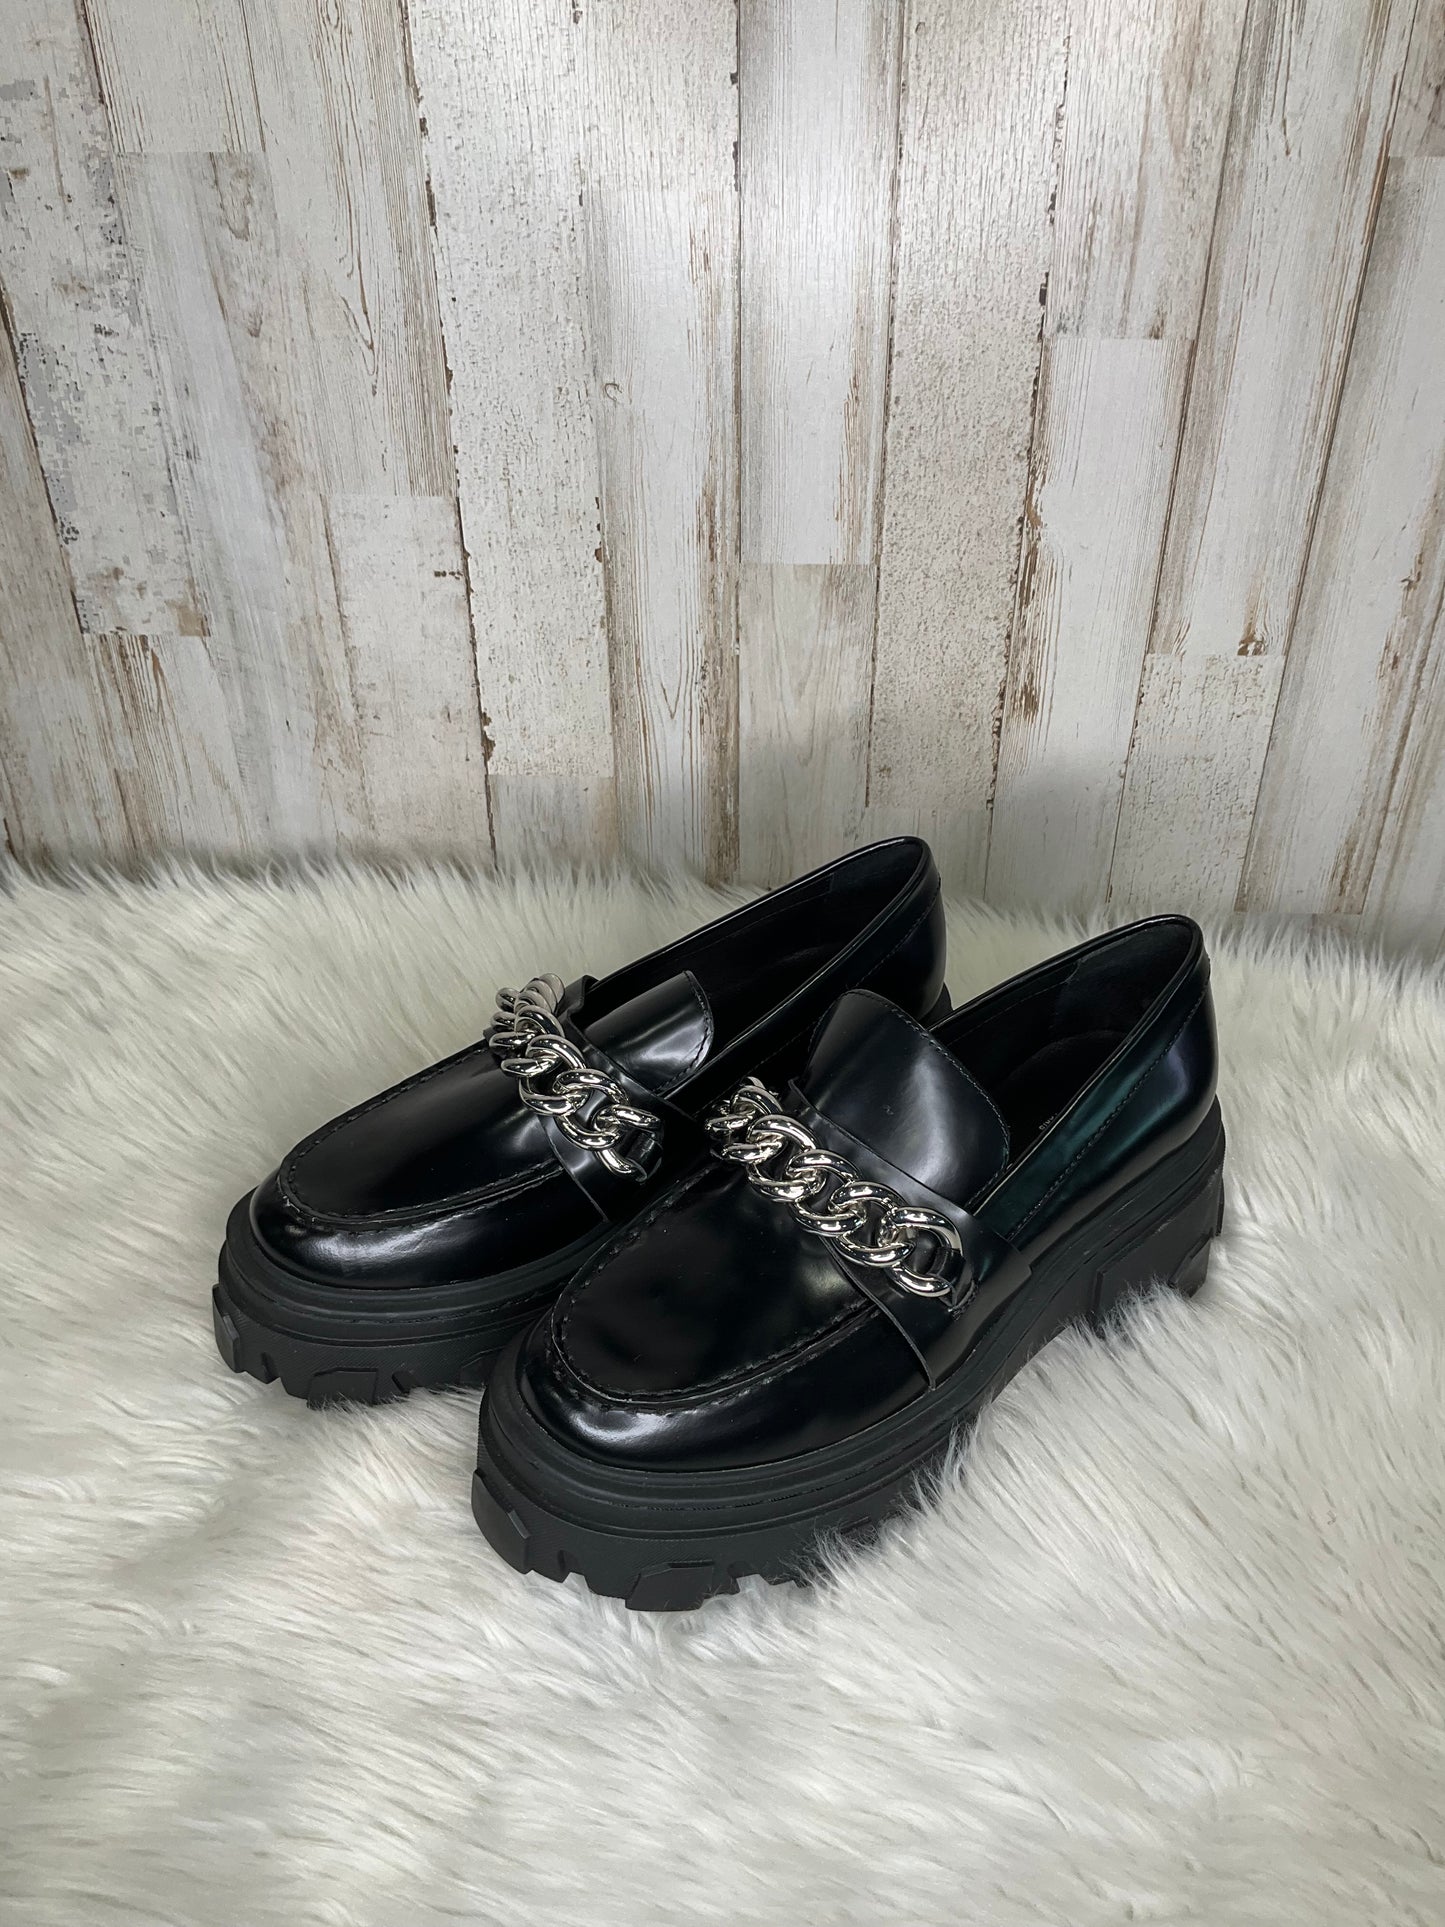 Black Shoes Heels Platform Cma, Size 8